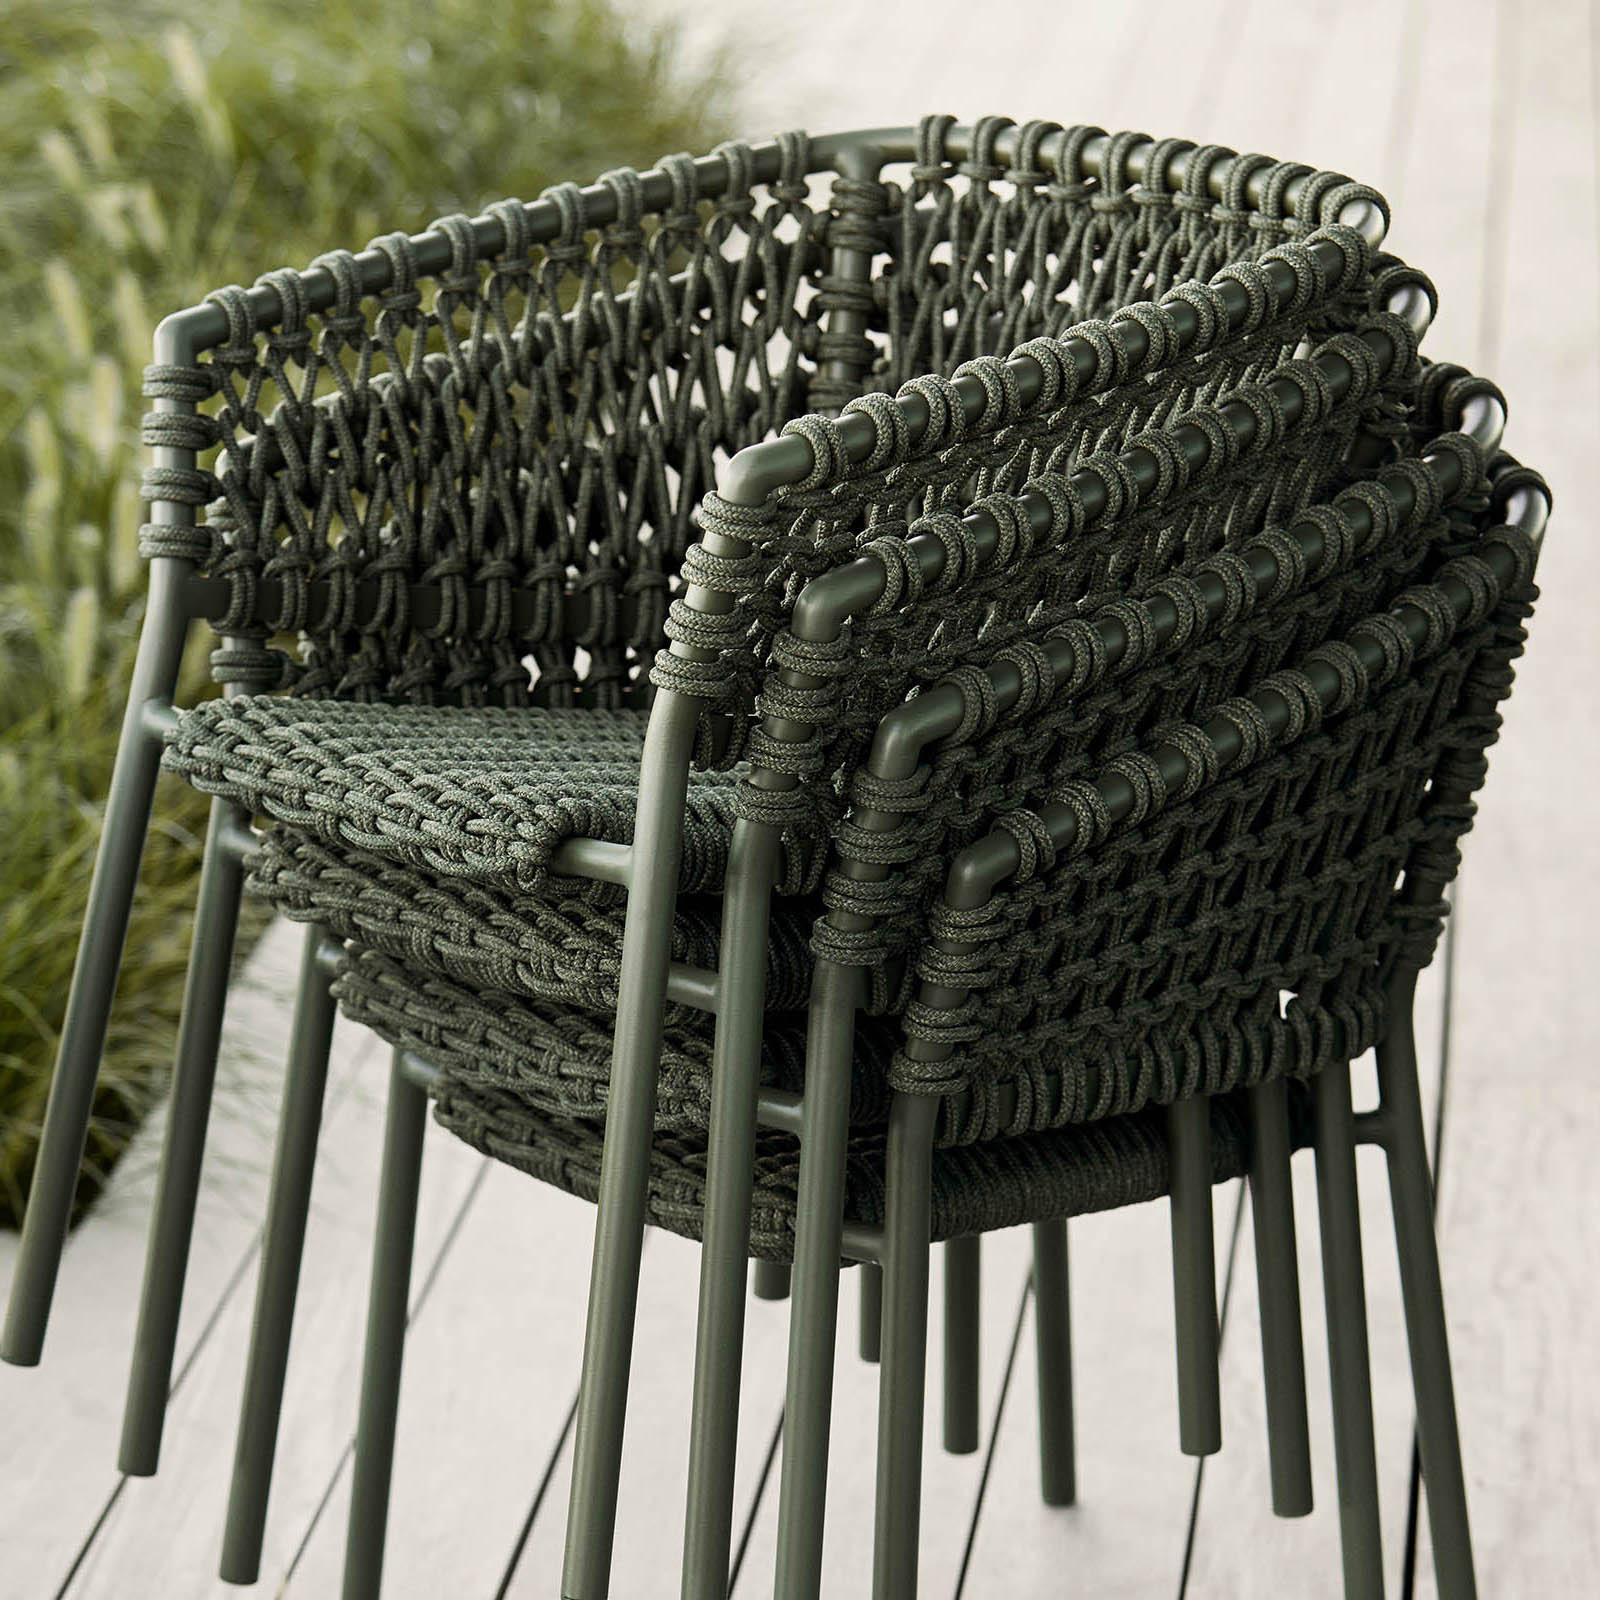 Ocean Stuhl aus Aluminium in Natural mit Kissen aus Cane-line Wove in Dark Grey